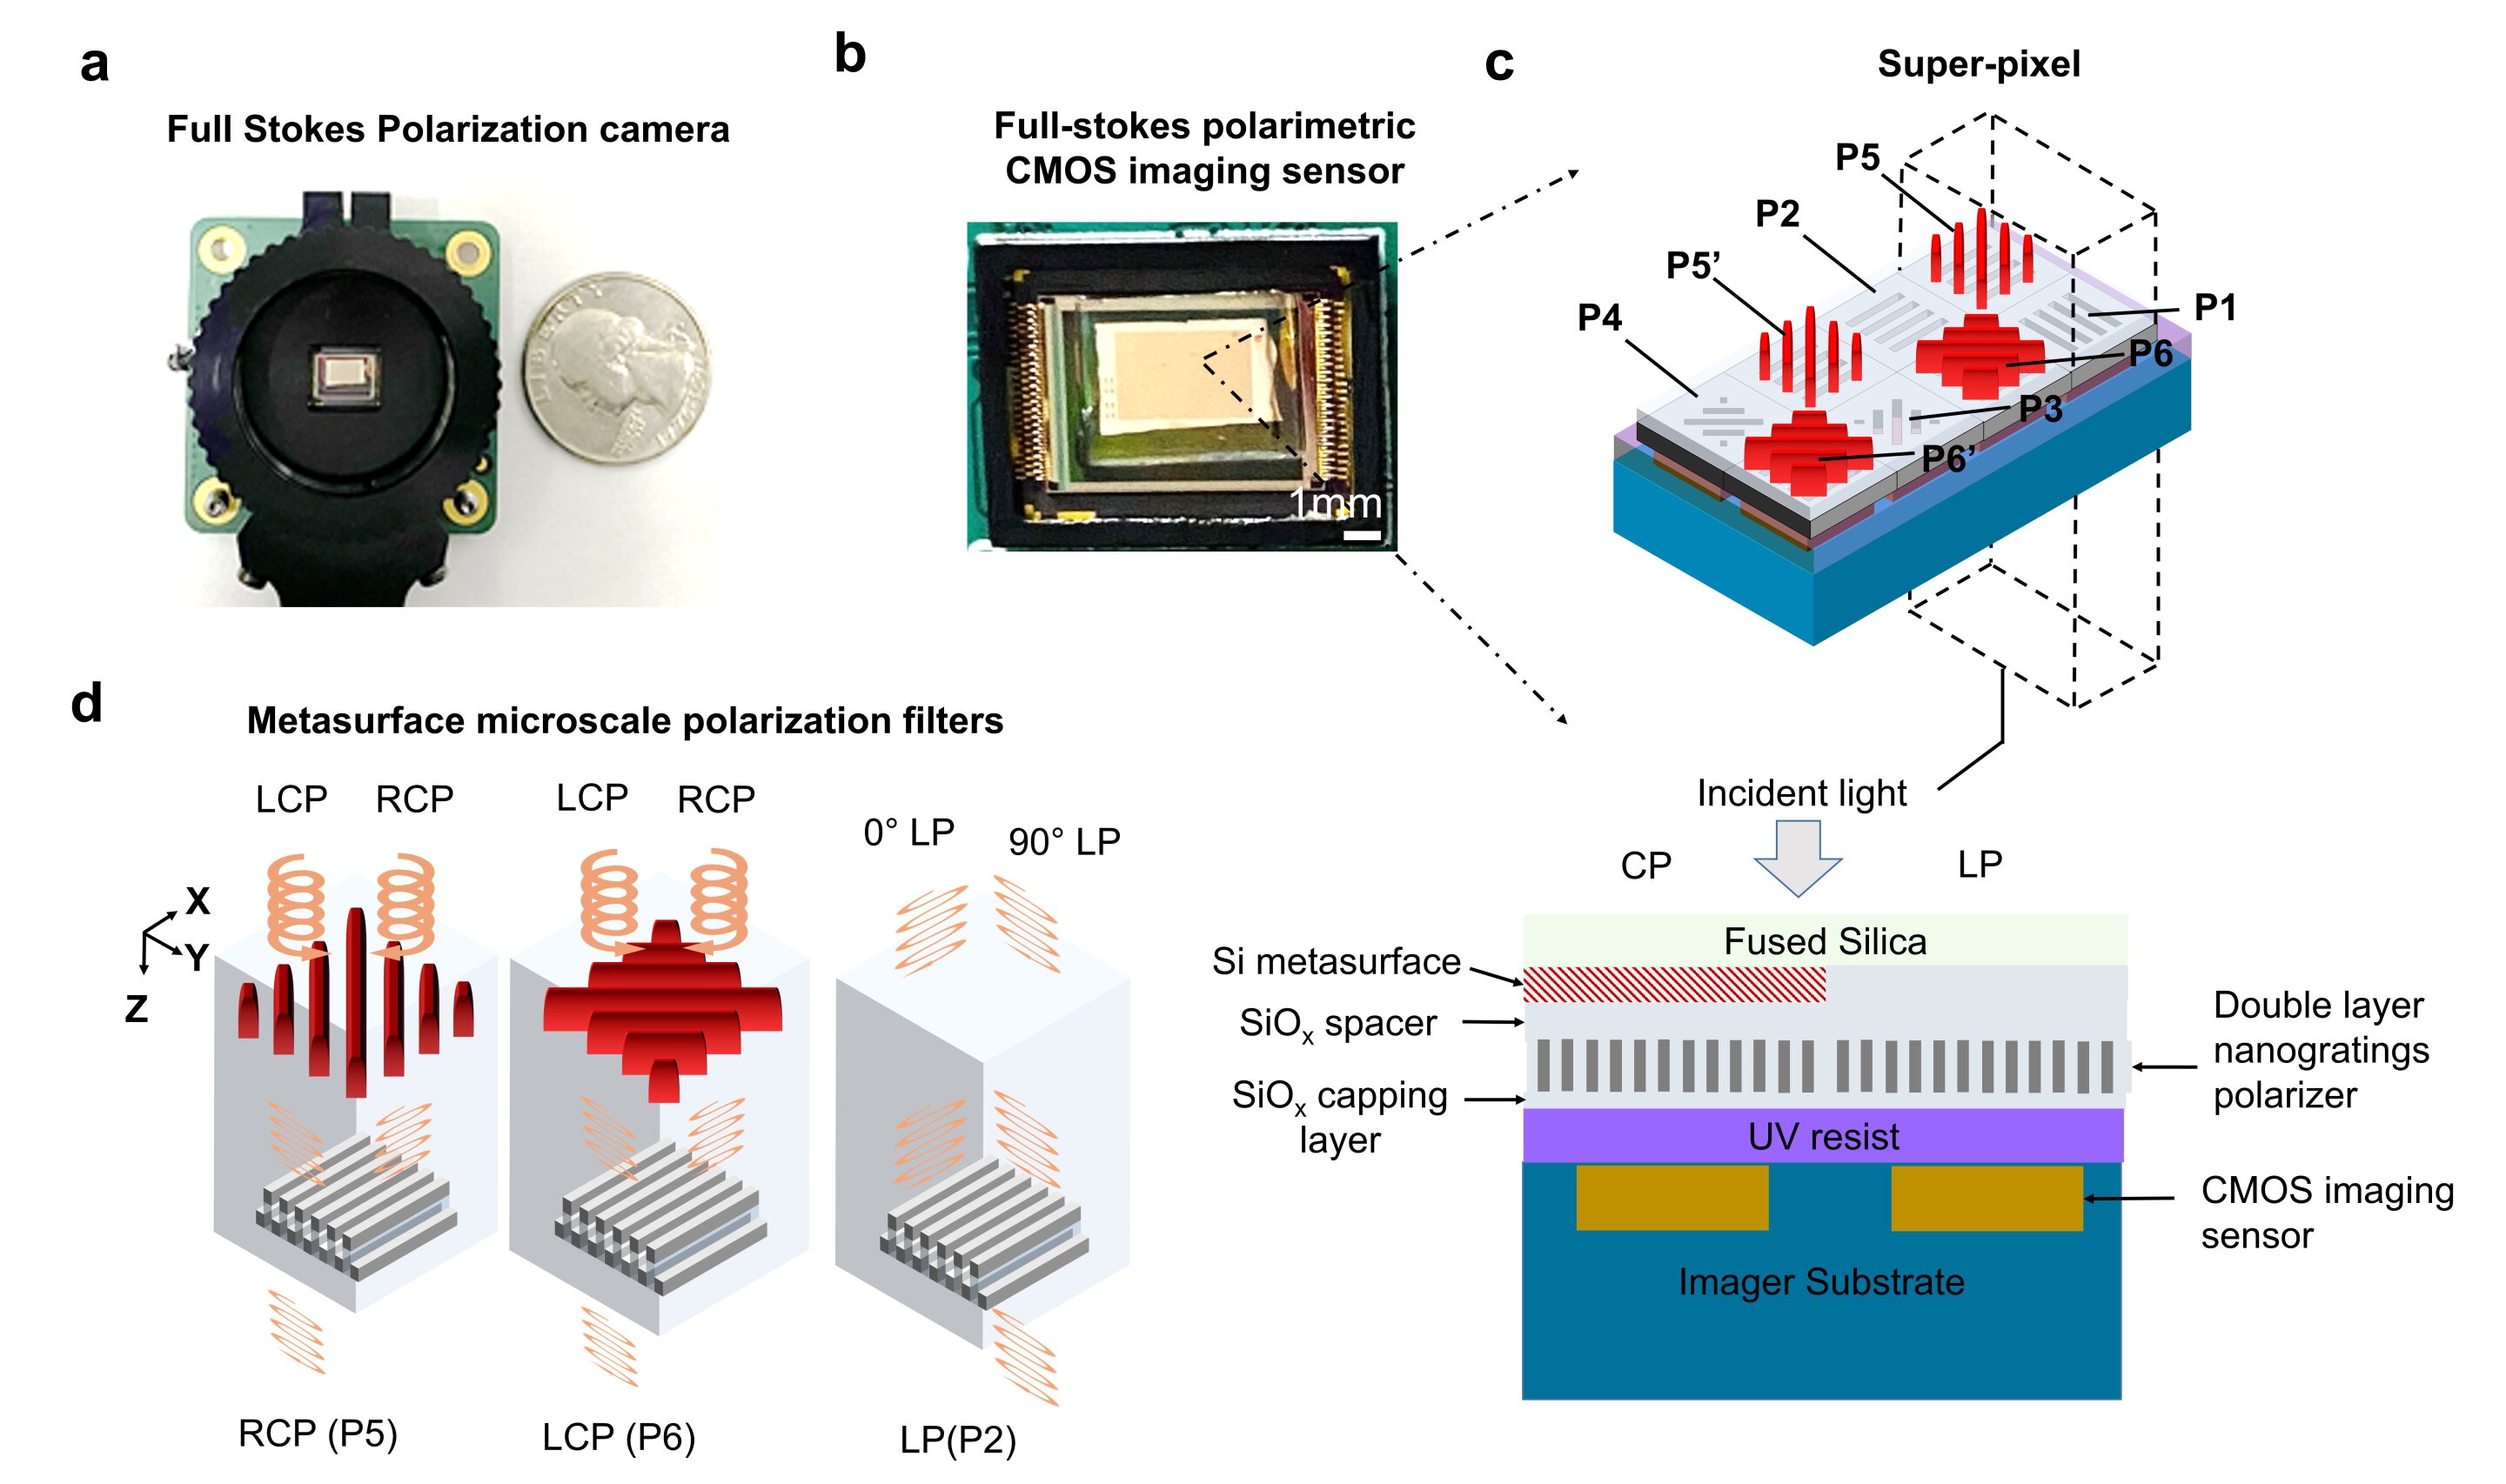 A bioinspired CMOS-integrated polarization imaging sensor